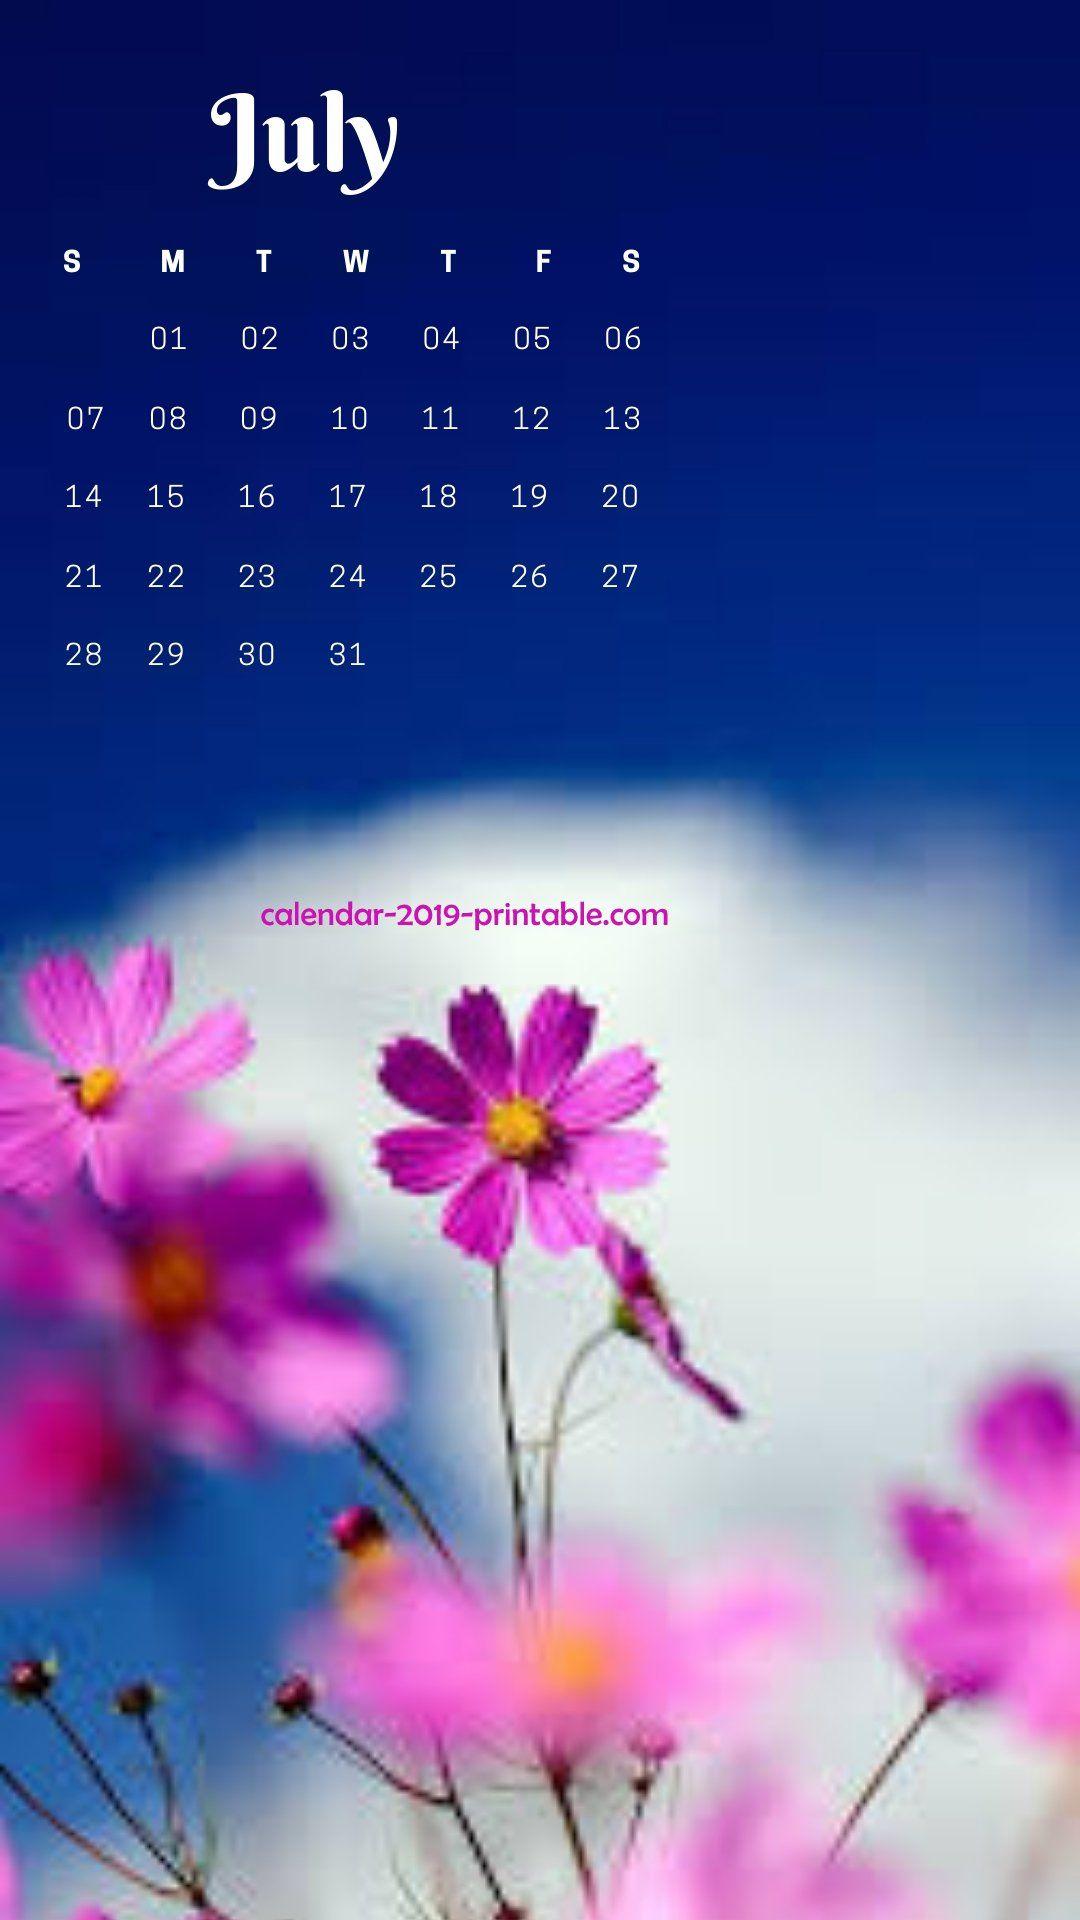 july 2019 iphone flower wallpaper Calendars in 2019